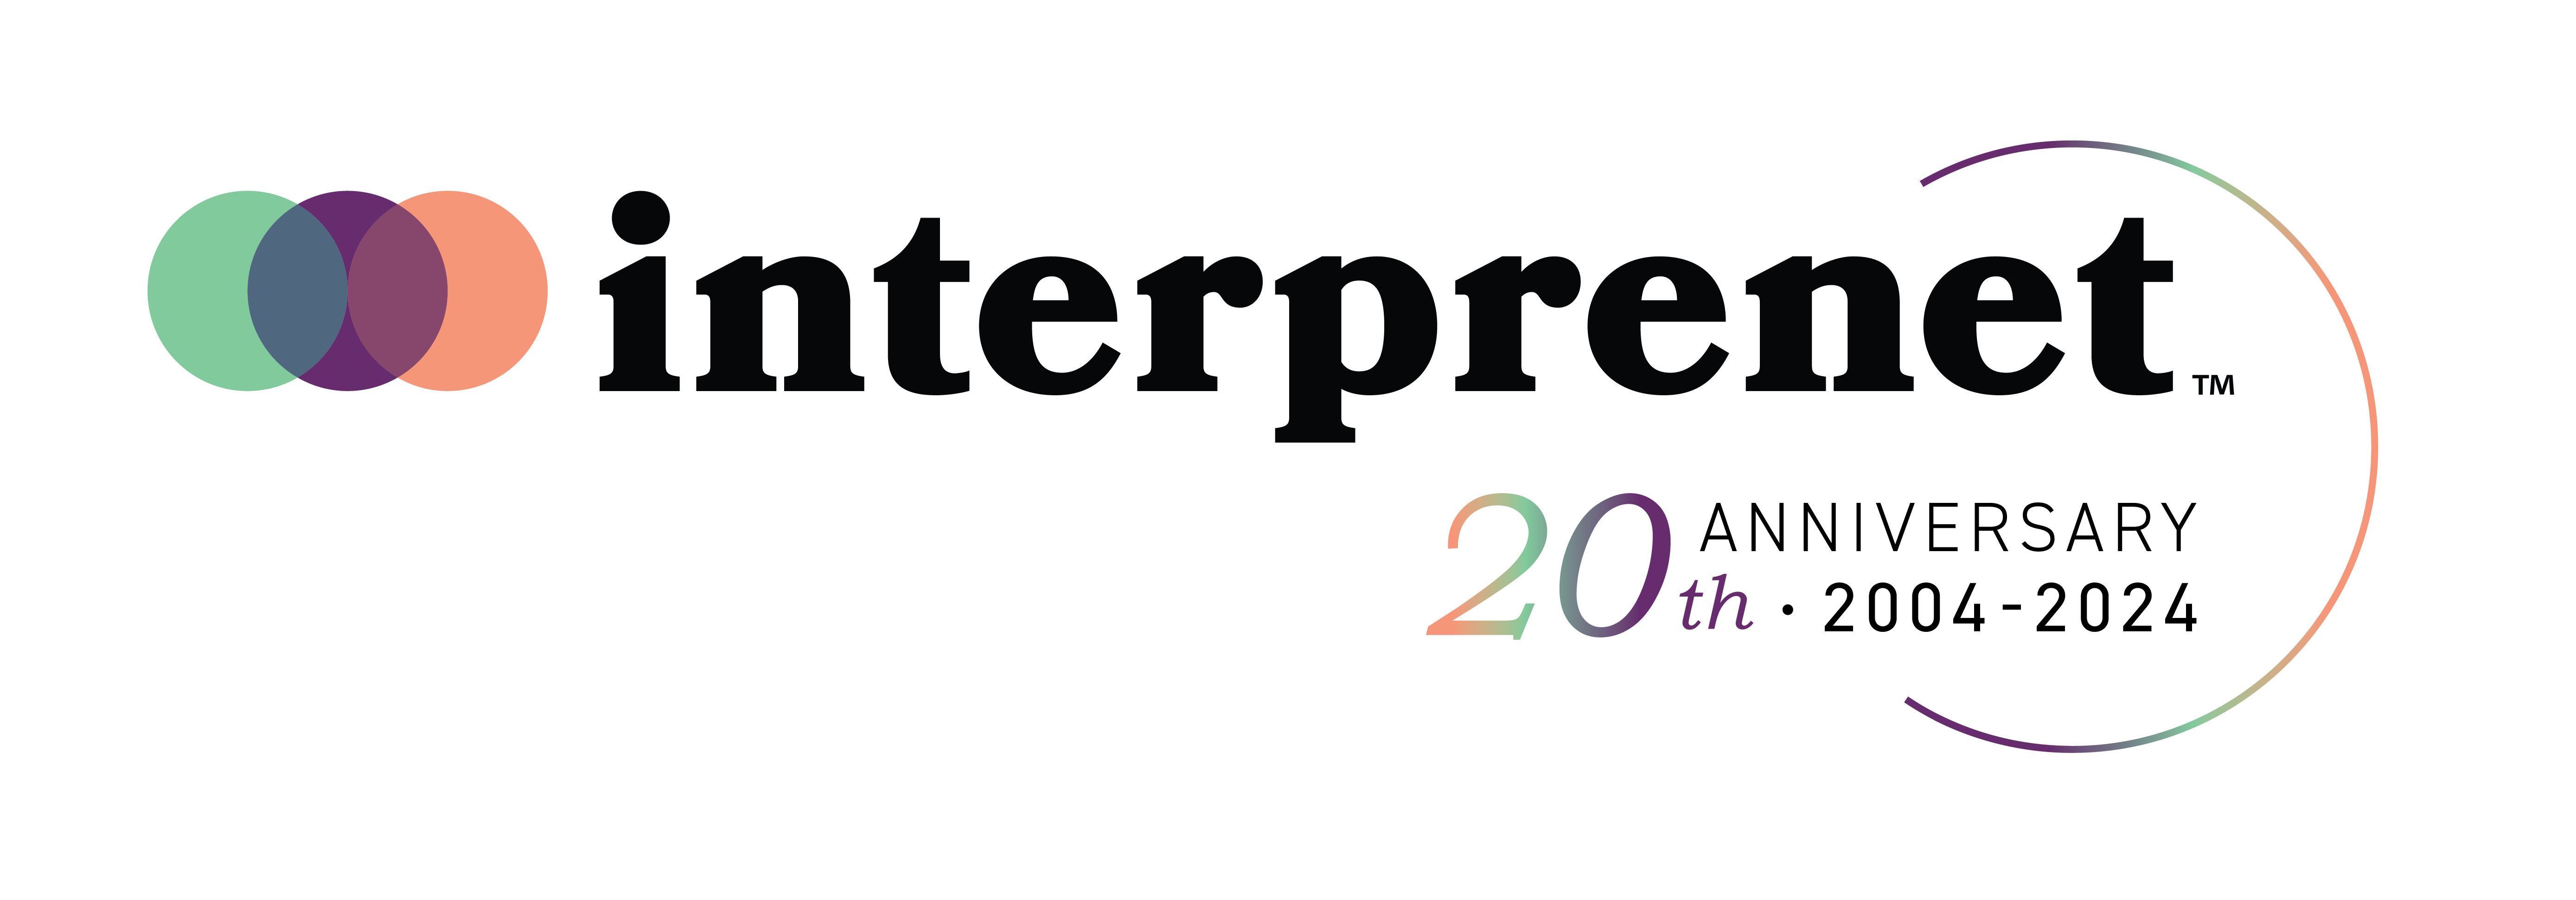 Interprenet logo 20th anniversary